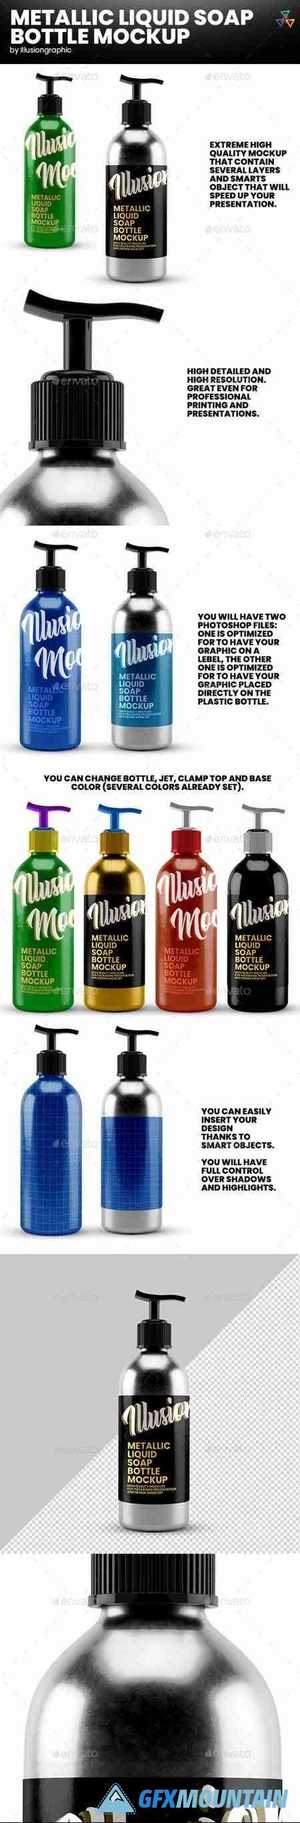 Metallic Liquid Soap Bottle Mockup 26550975